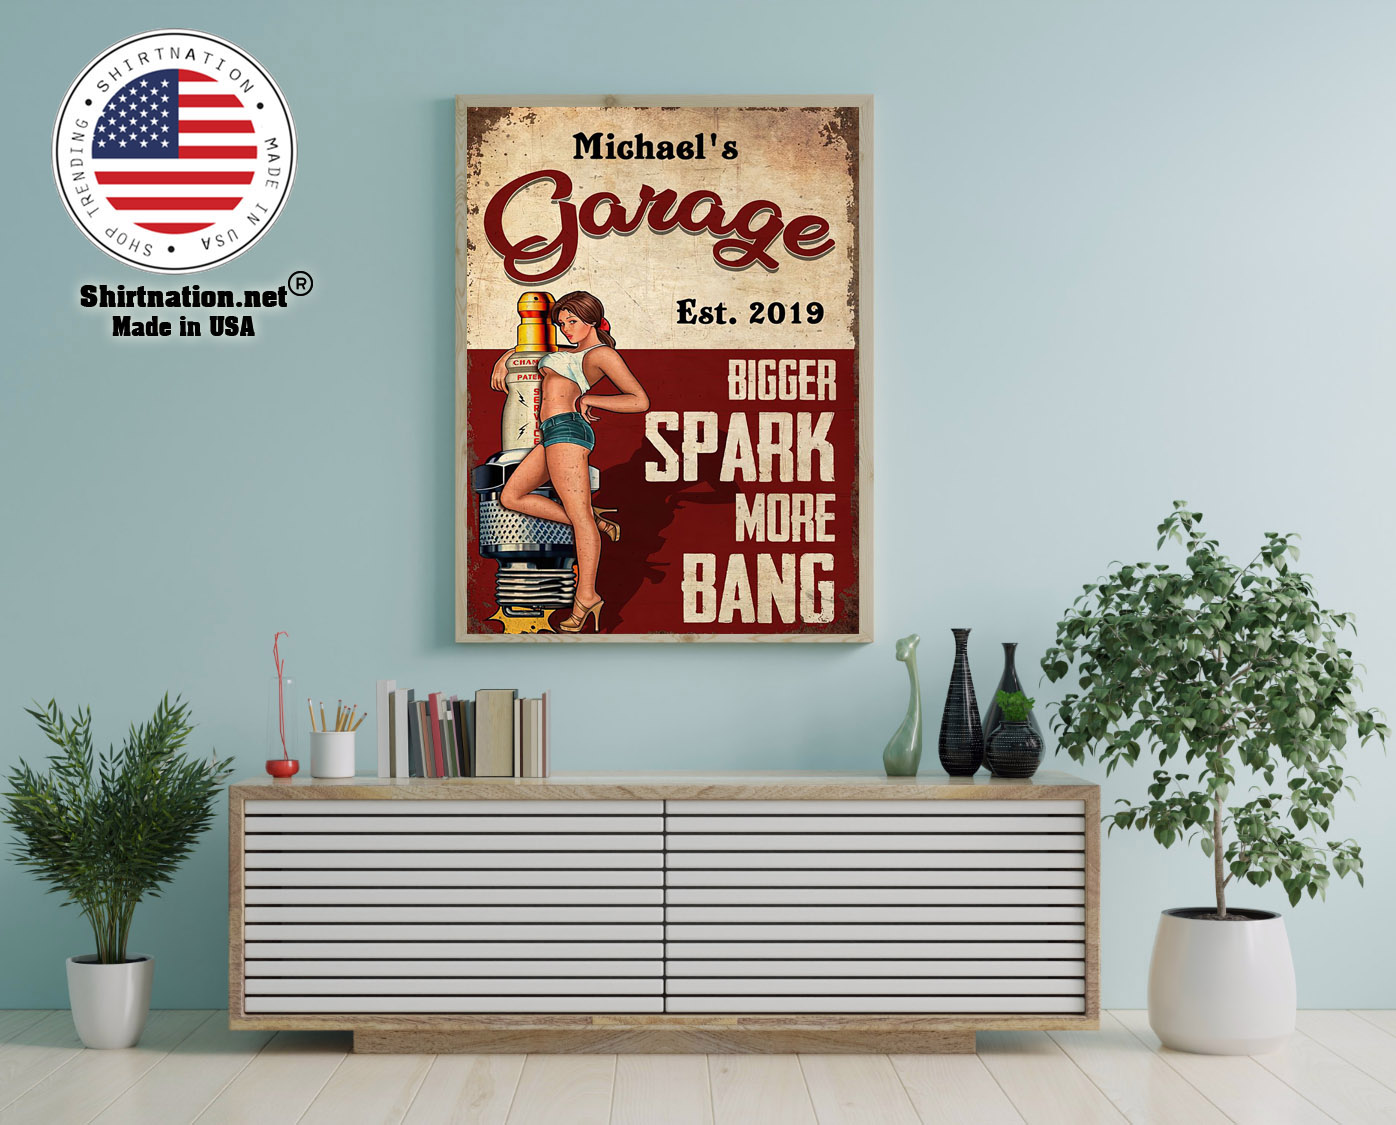 Garage bigger spark more bang poster 12